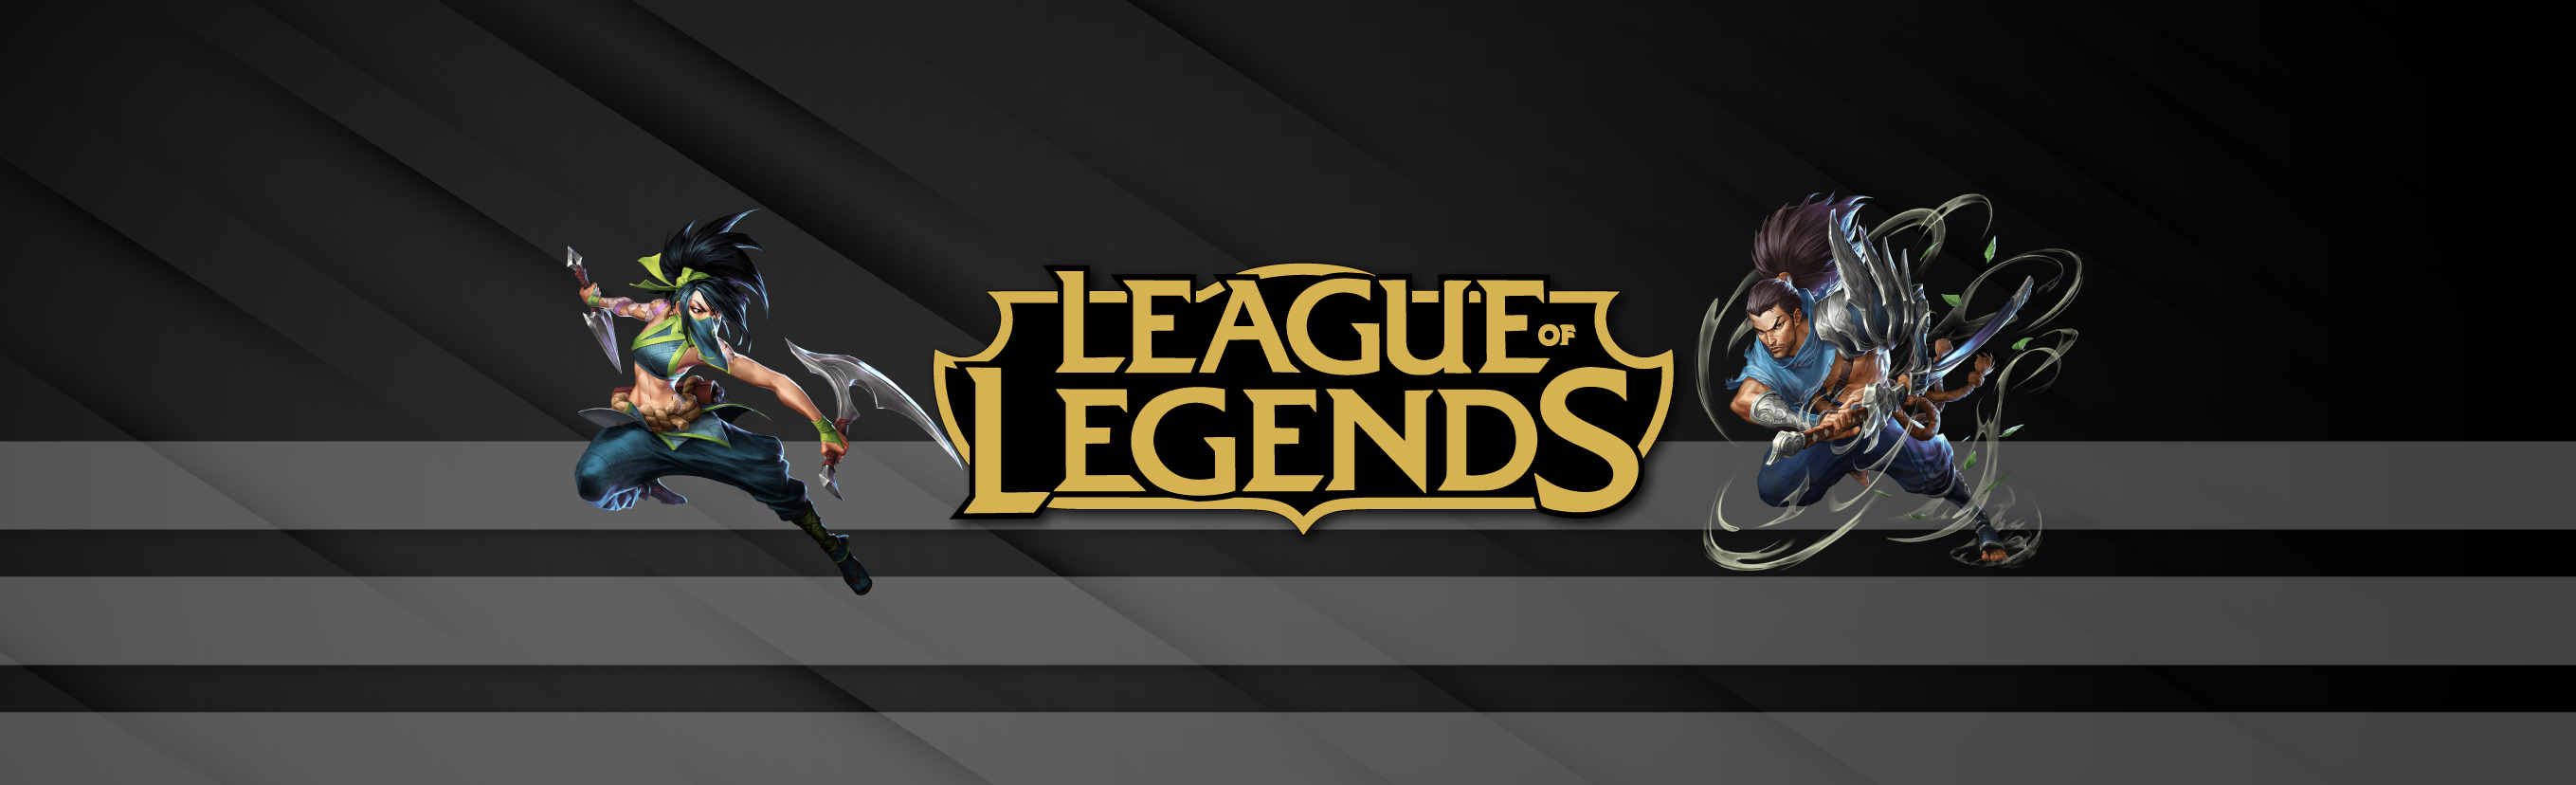 etiqueta escolar league of legends 9